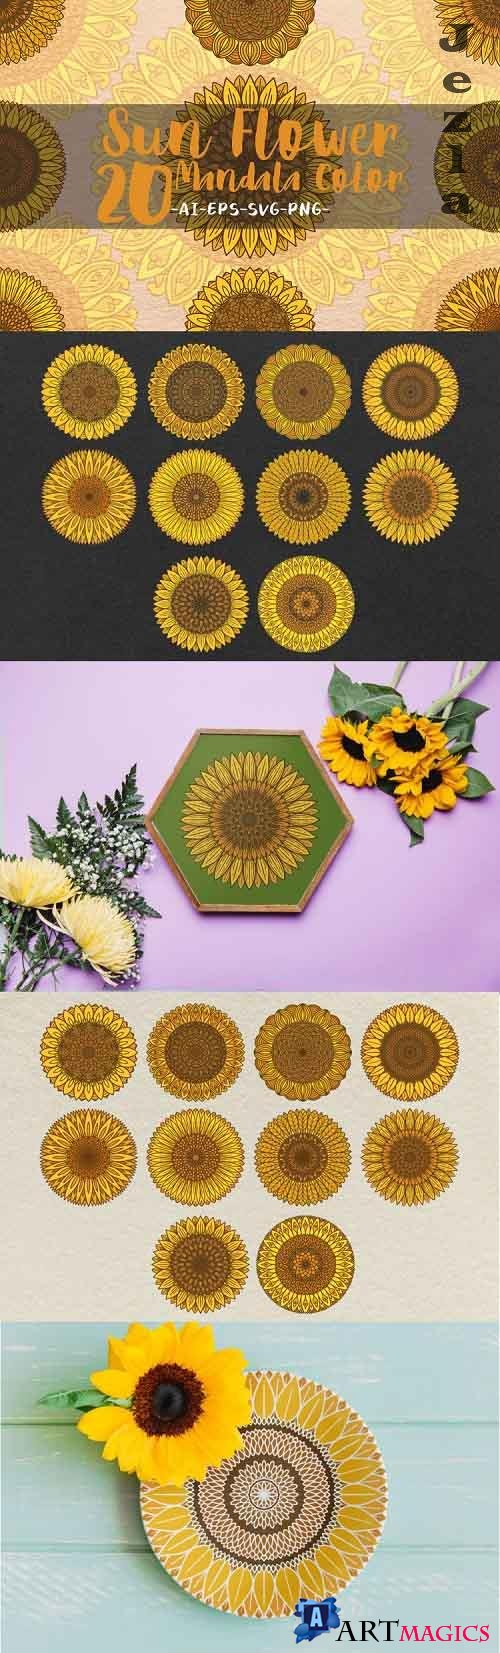 Sunflower mandalas color - 564087